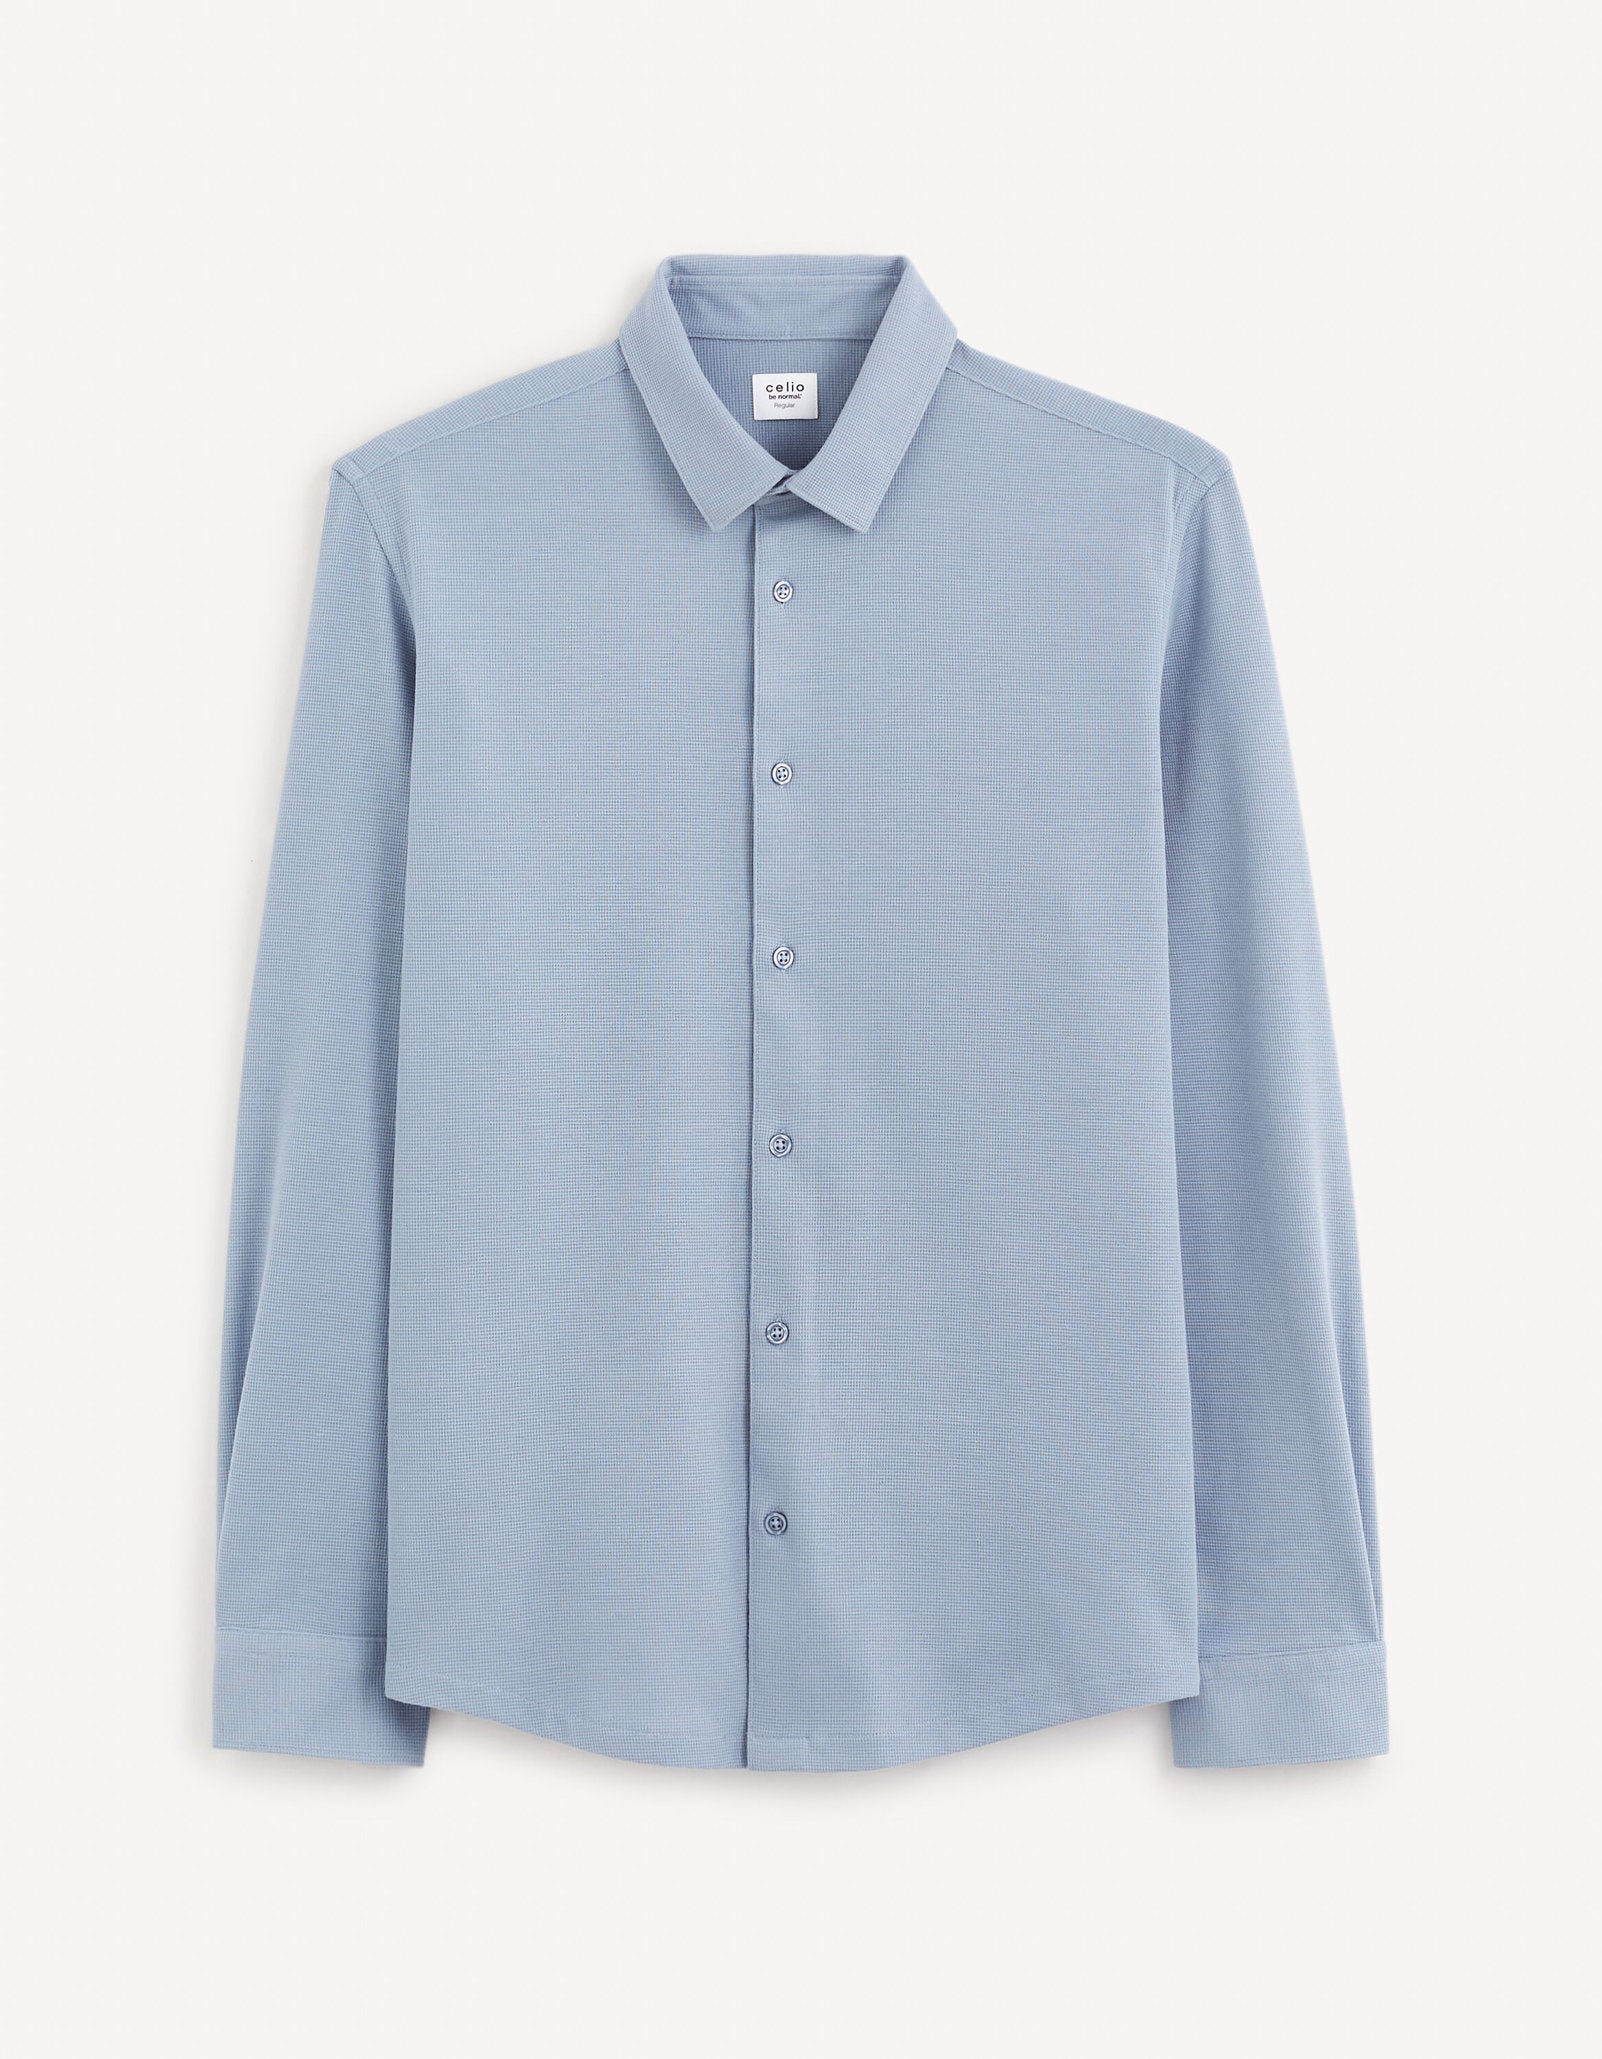 Regular Plain Embossed Shirt_GAWAFFLE_LIGHT BLUE_01